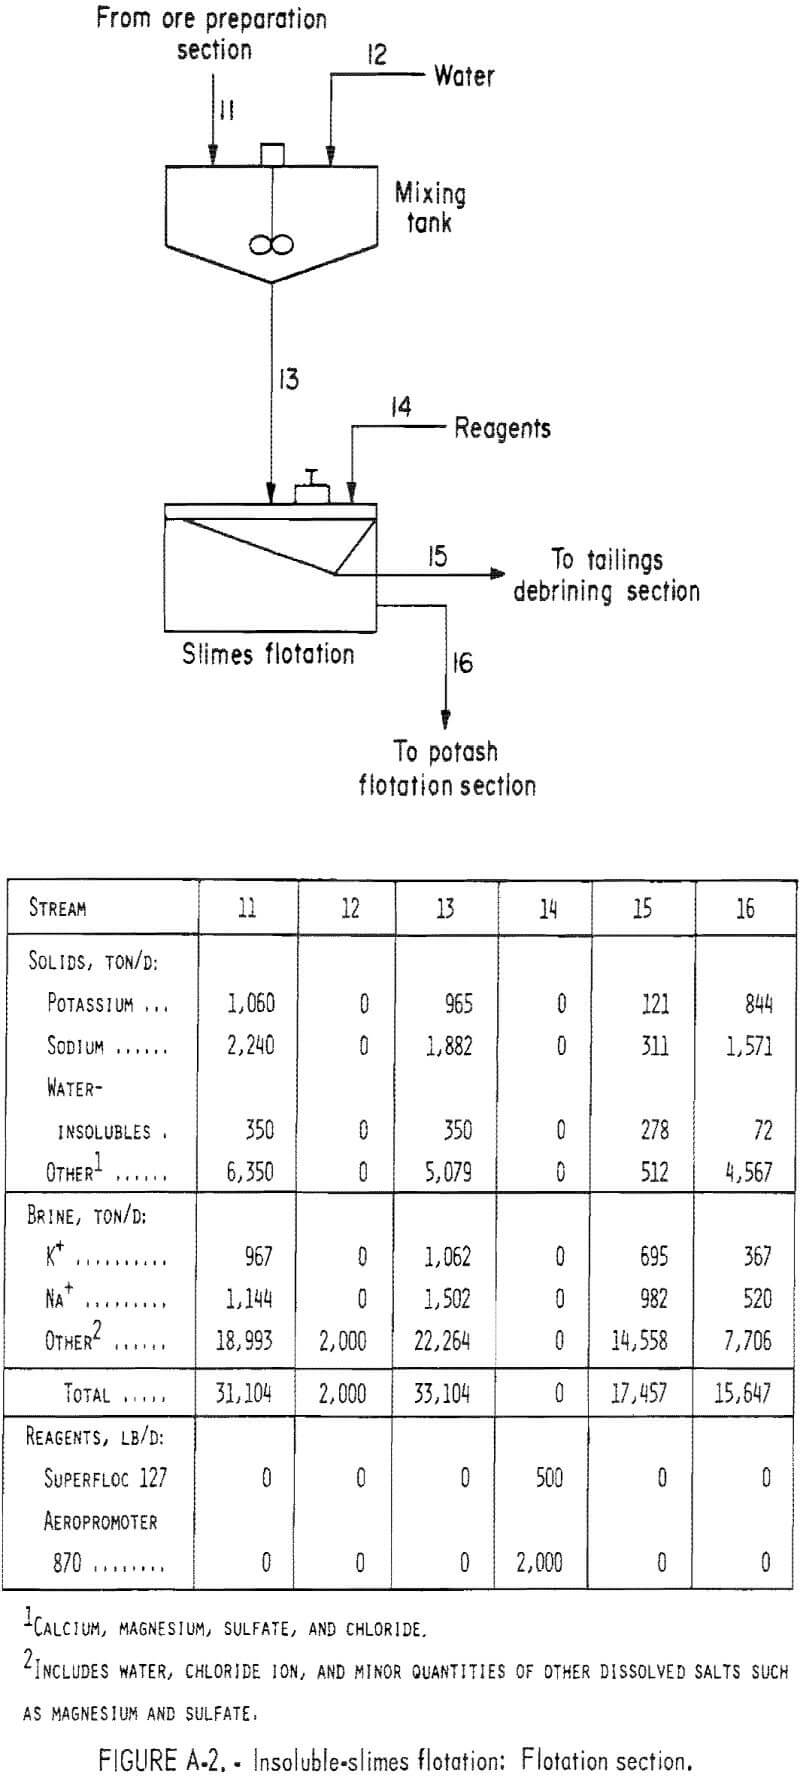 carnallite-ore flotation section